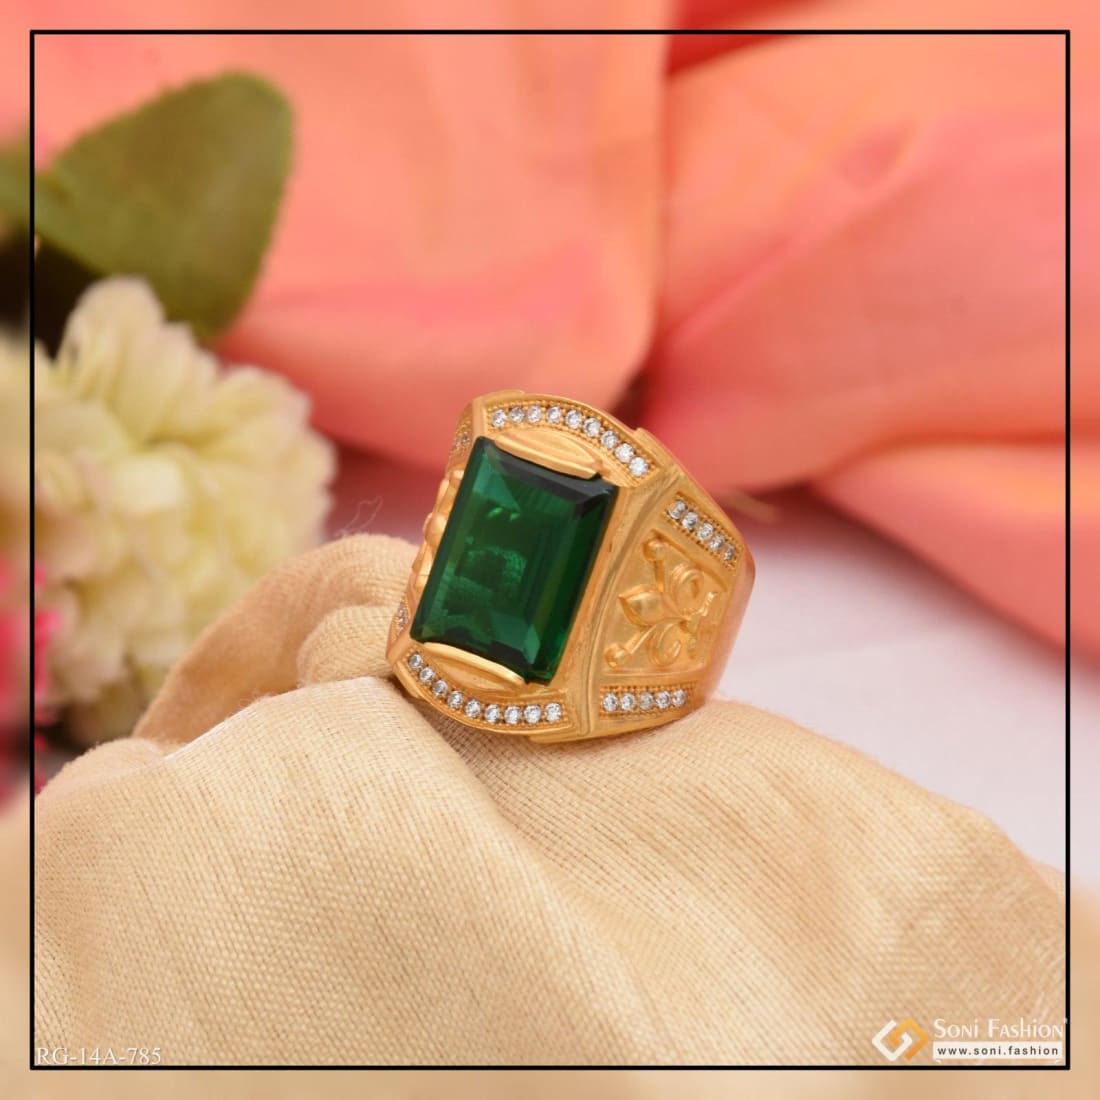 The Cerculean Emerald Gold Ring